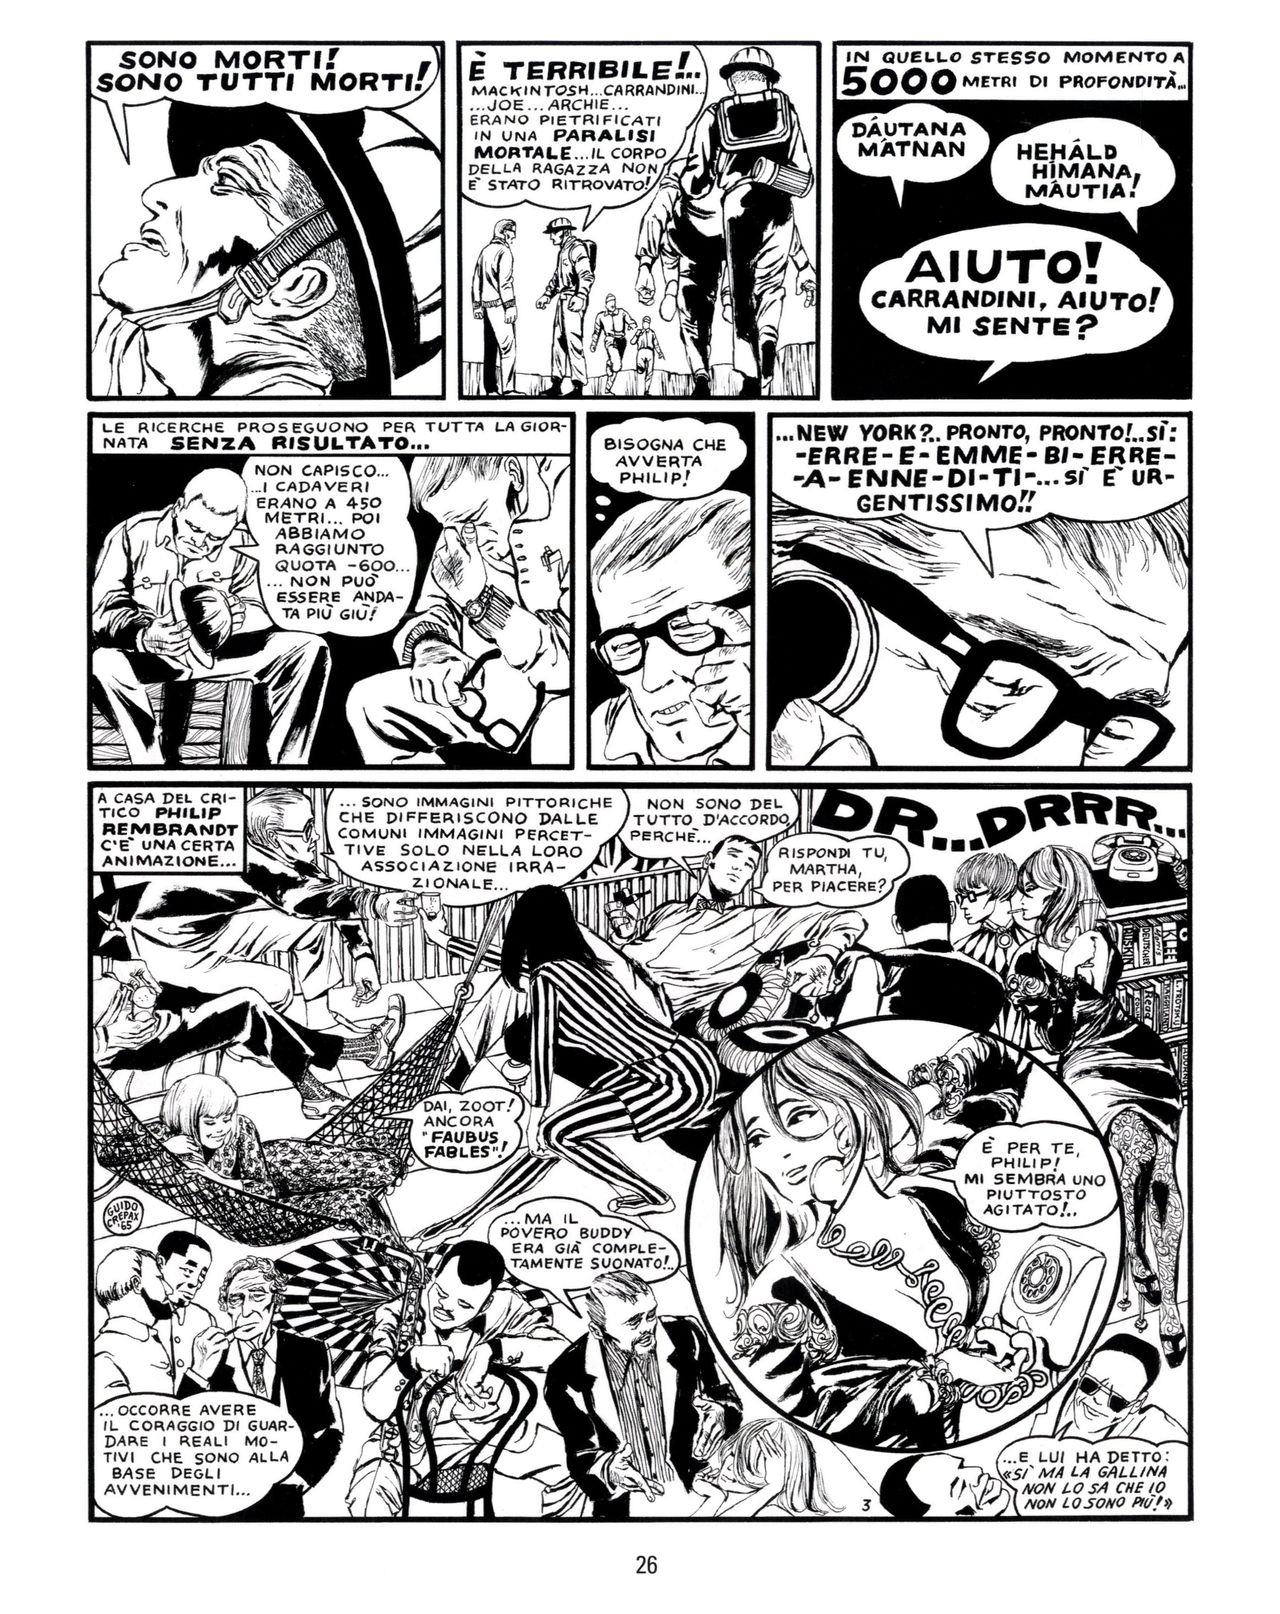 [Guido Crepax] Erotica Fumetti #25 : L'ascesa dei sotterranei : I cavalieri ciechi [Italian] 27